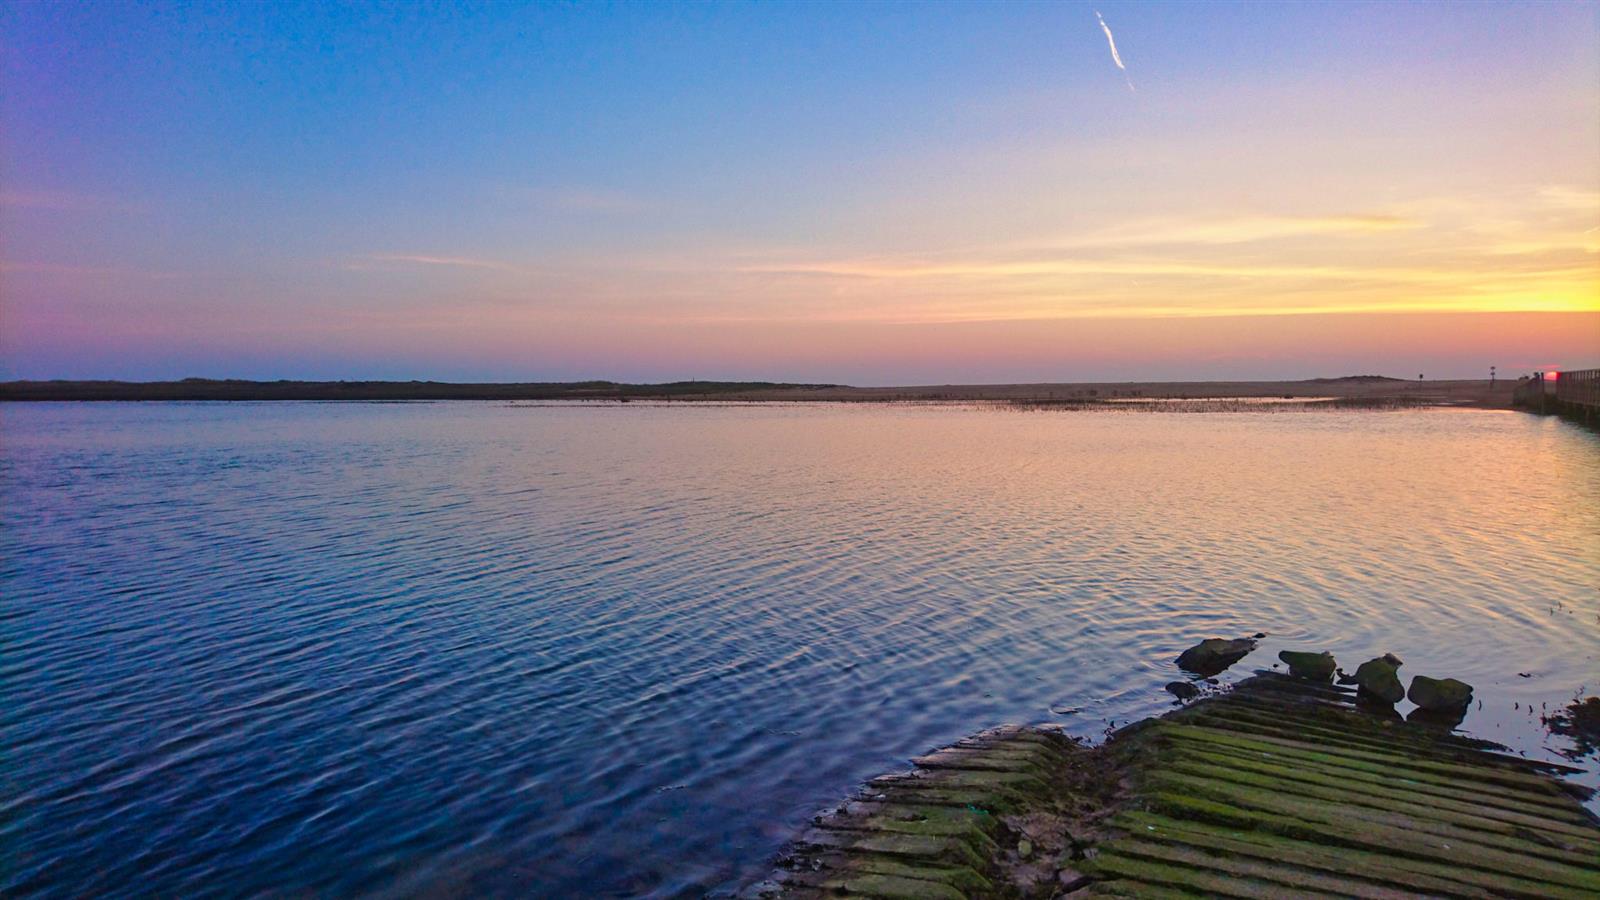  Vendée sunset - Camping La Siesta | La Faute sur Mer